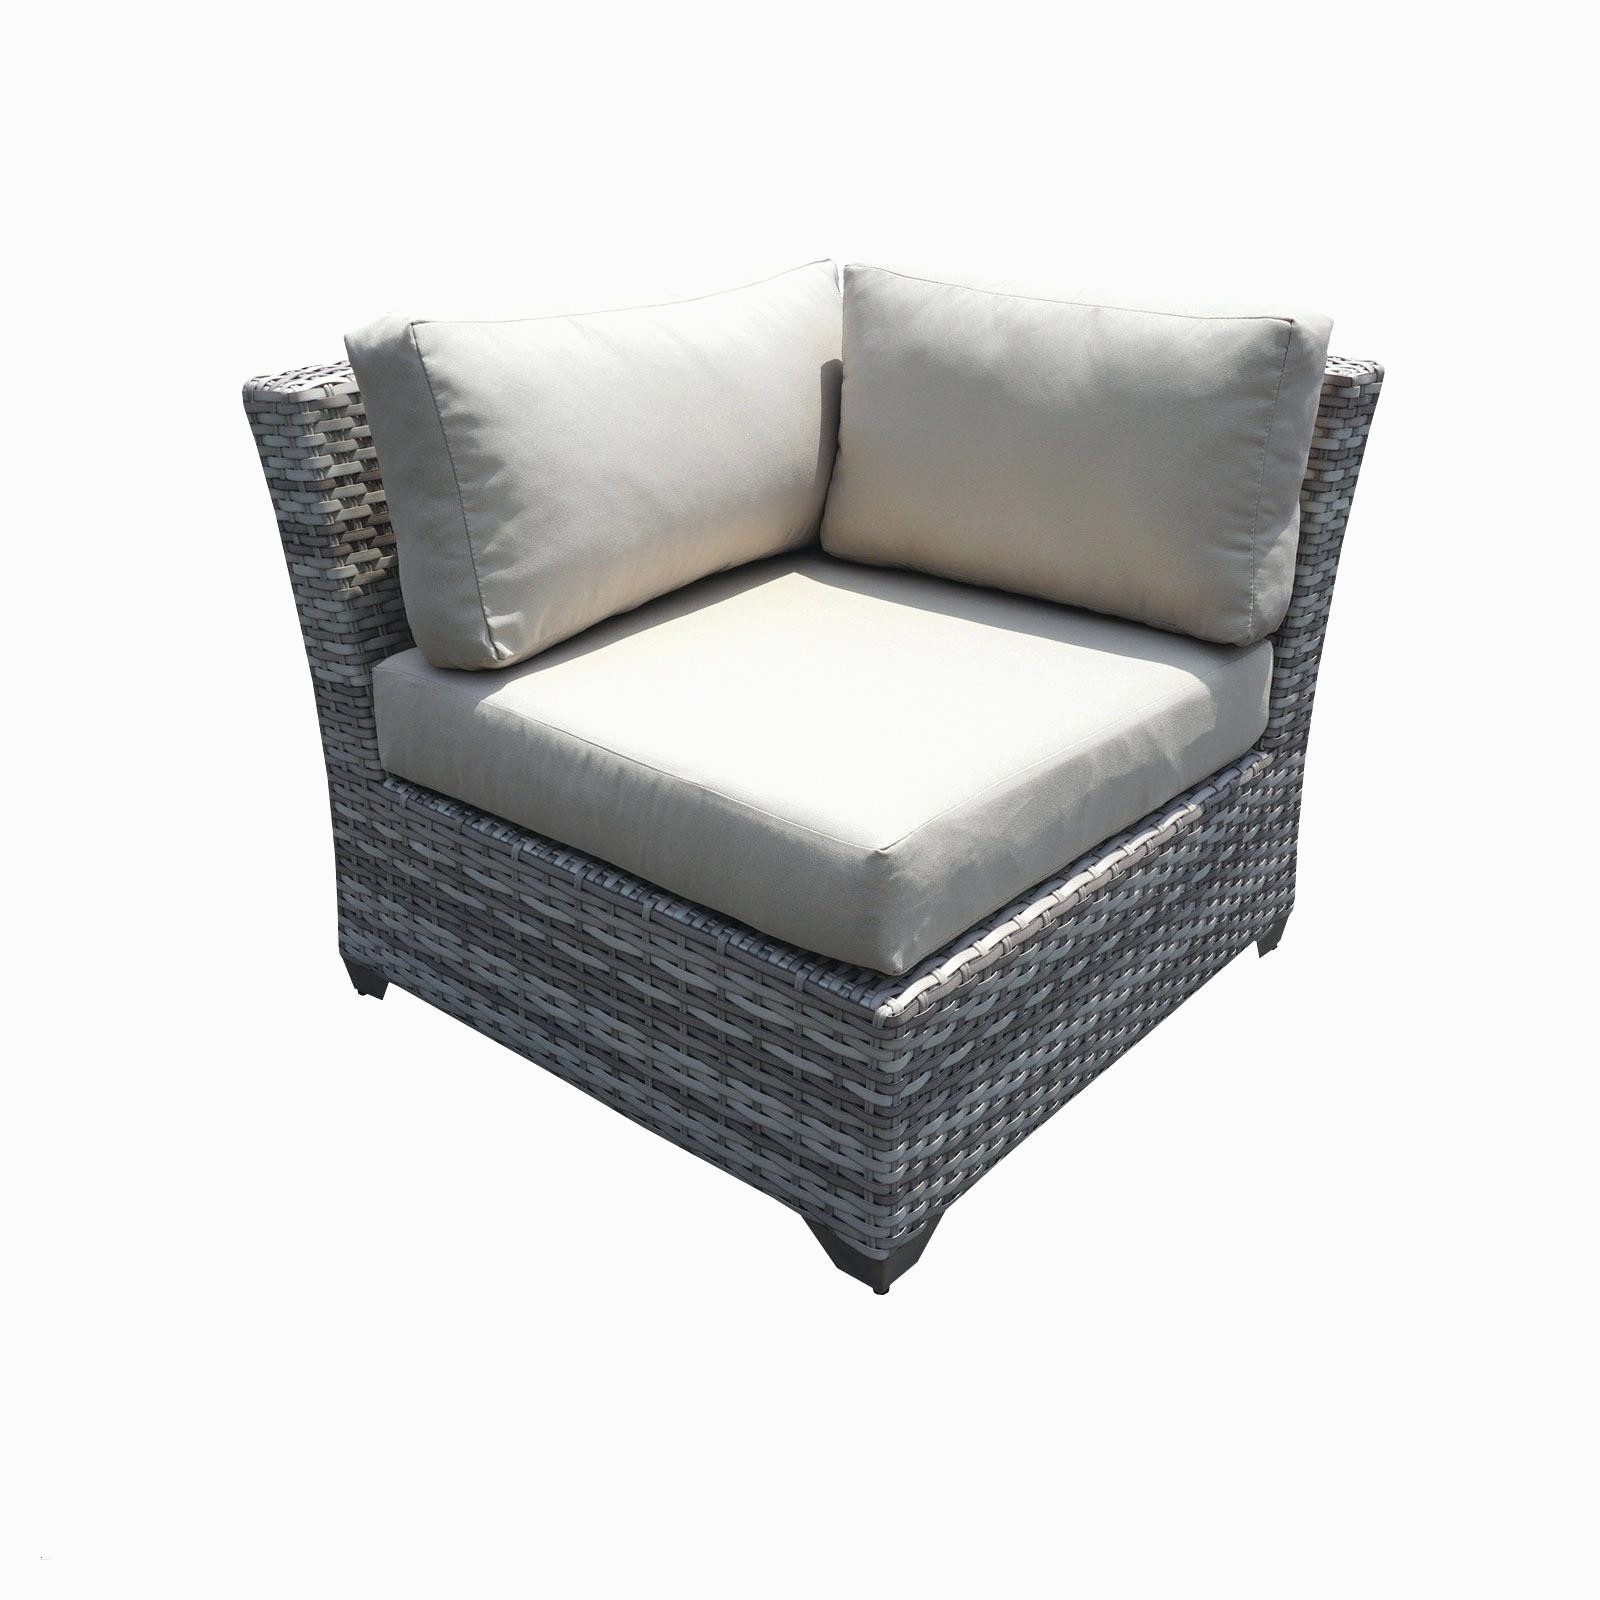 outdoor furniture seattle luxury elegant outdoor furniture seattle bomelconsult